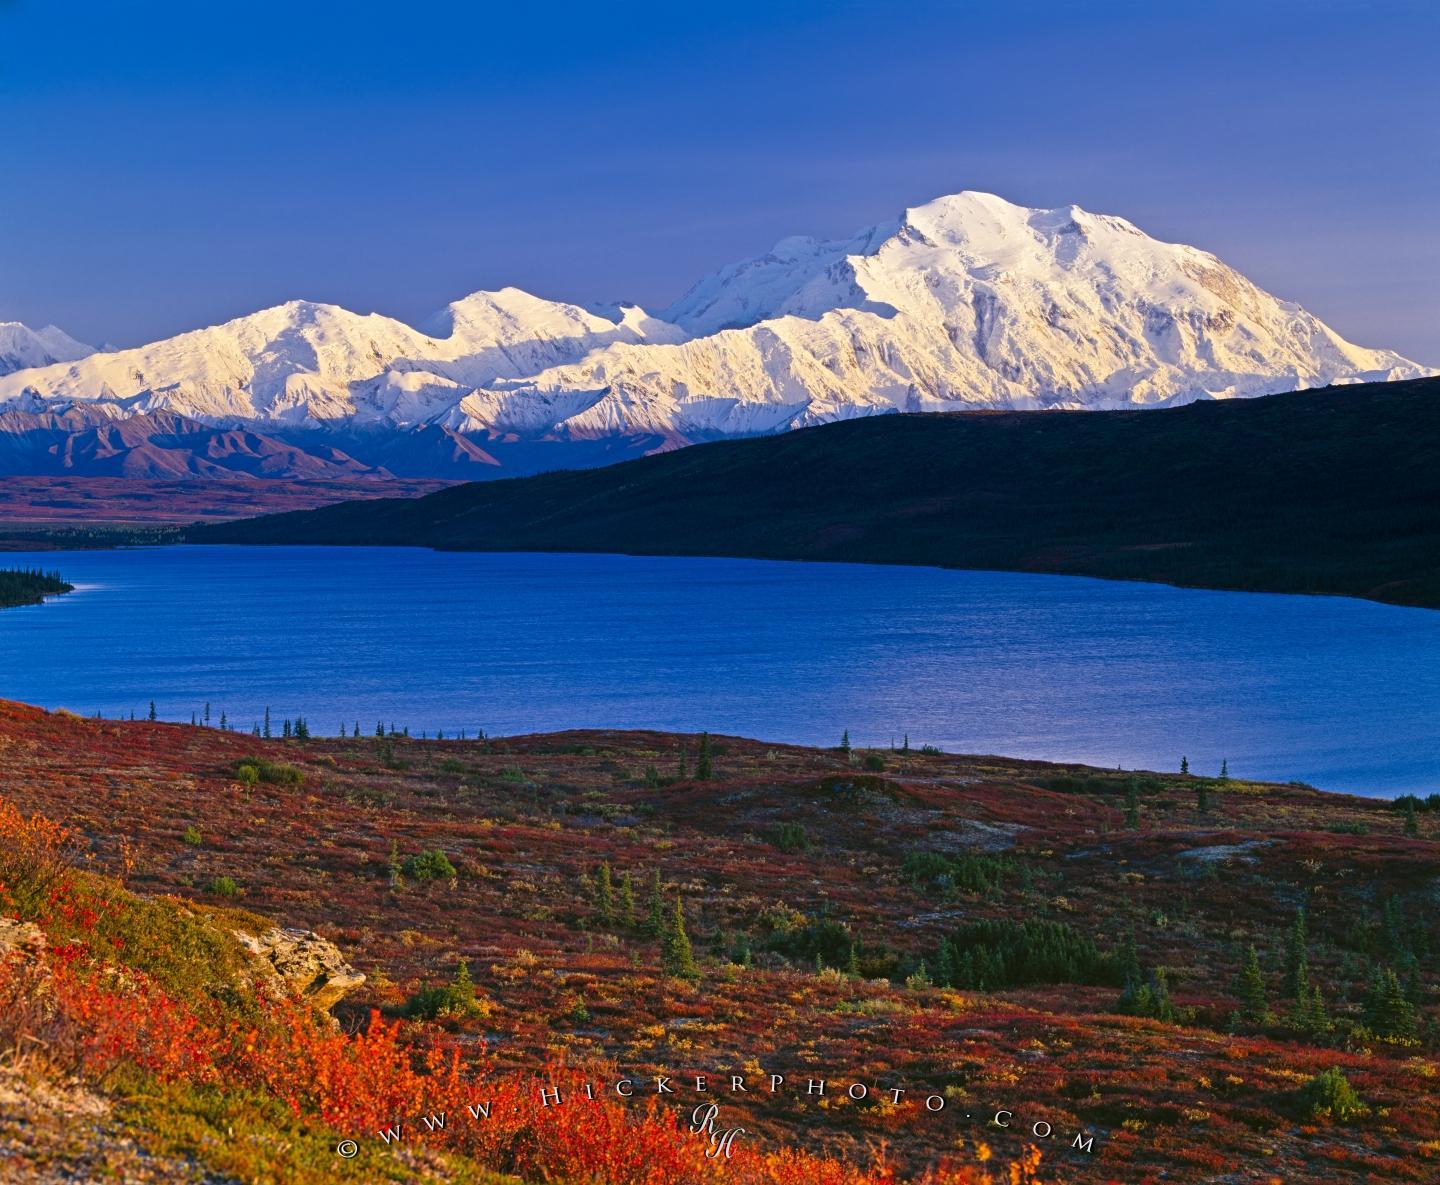 Free wallpaper background: Denali Mountain Fall Lake Scenery Picture